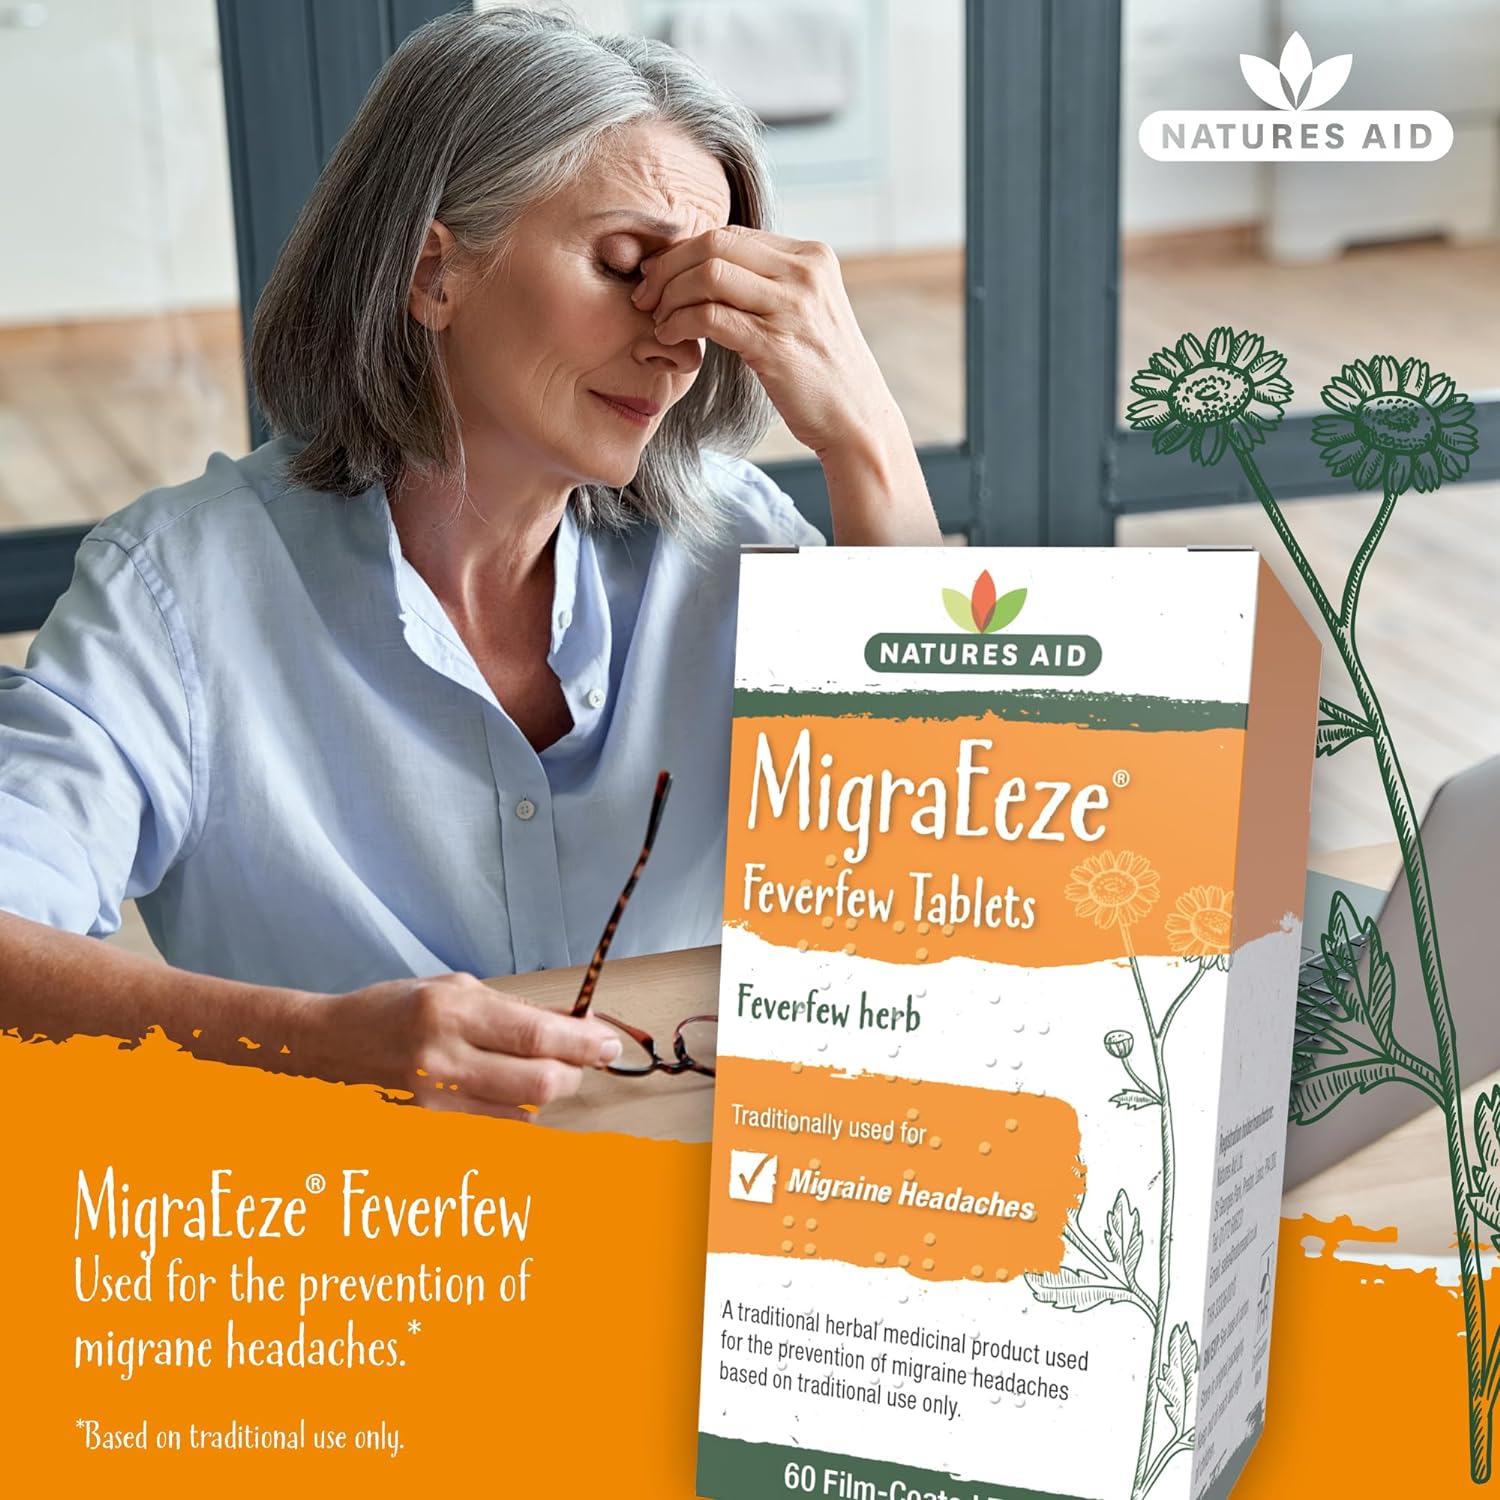 Herbal MigraEeze Feverfew Migraine Headaches 60 Tabs